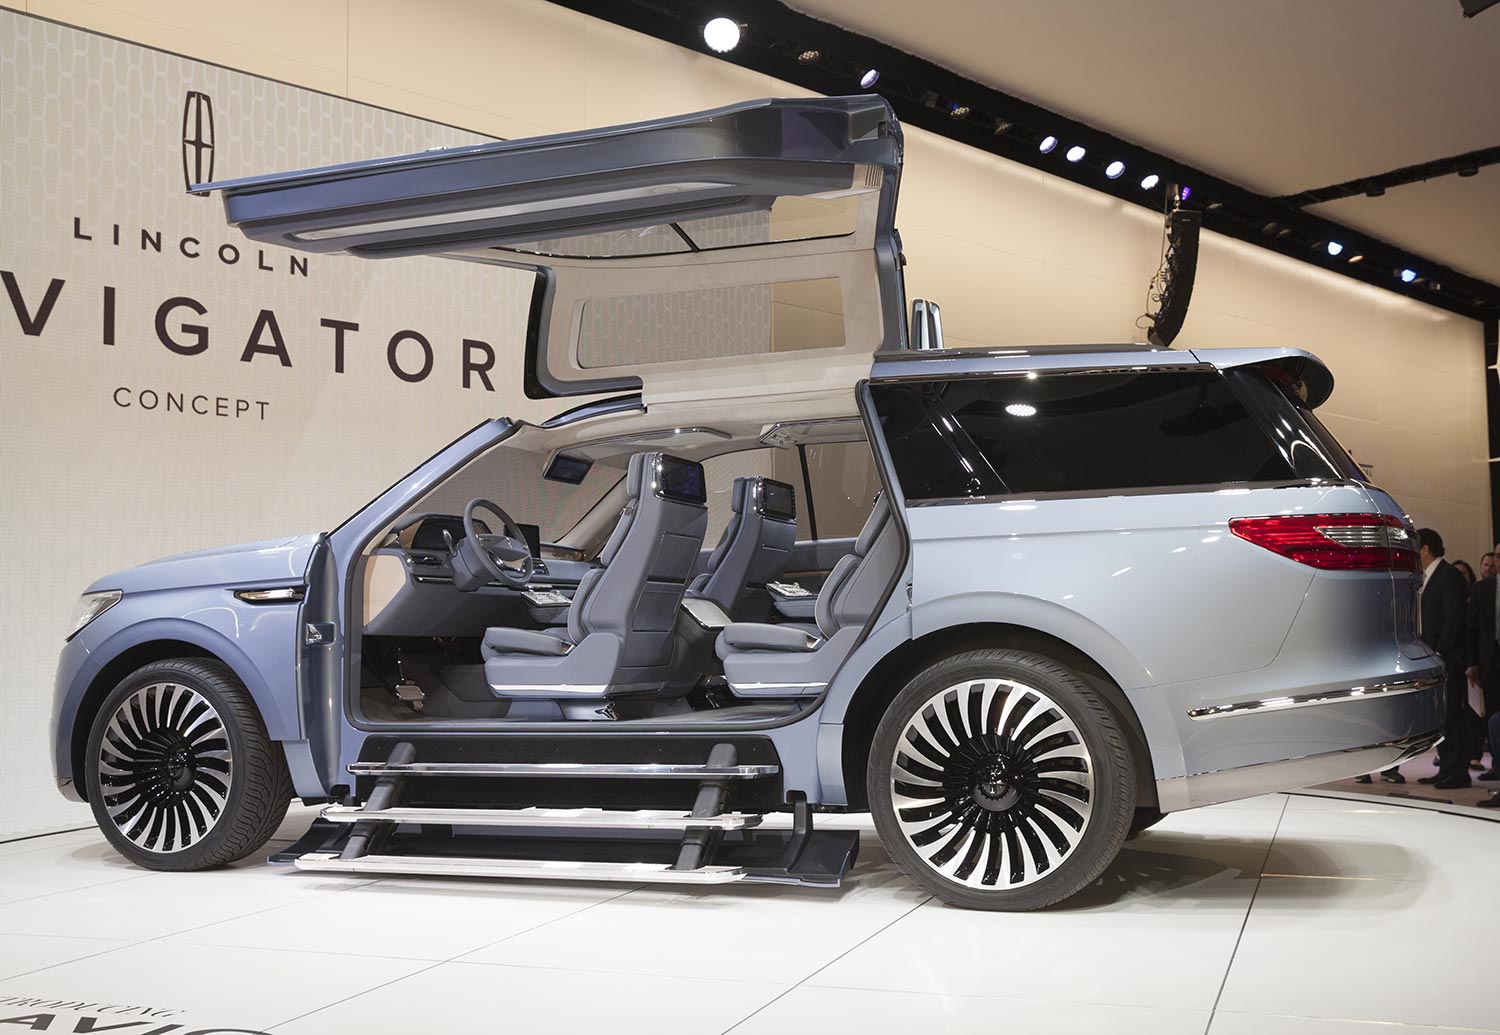 Lincoln Navigator concept car on display at New York International Auto Show